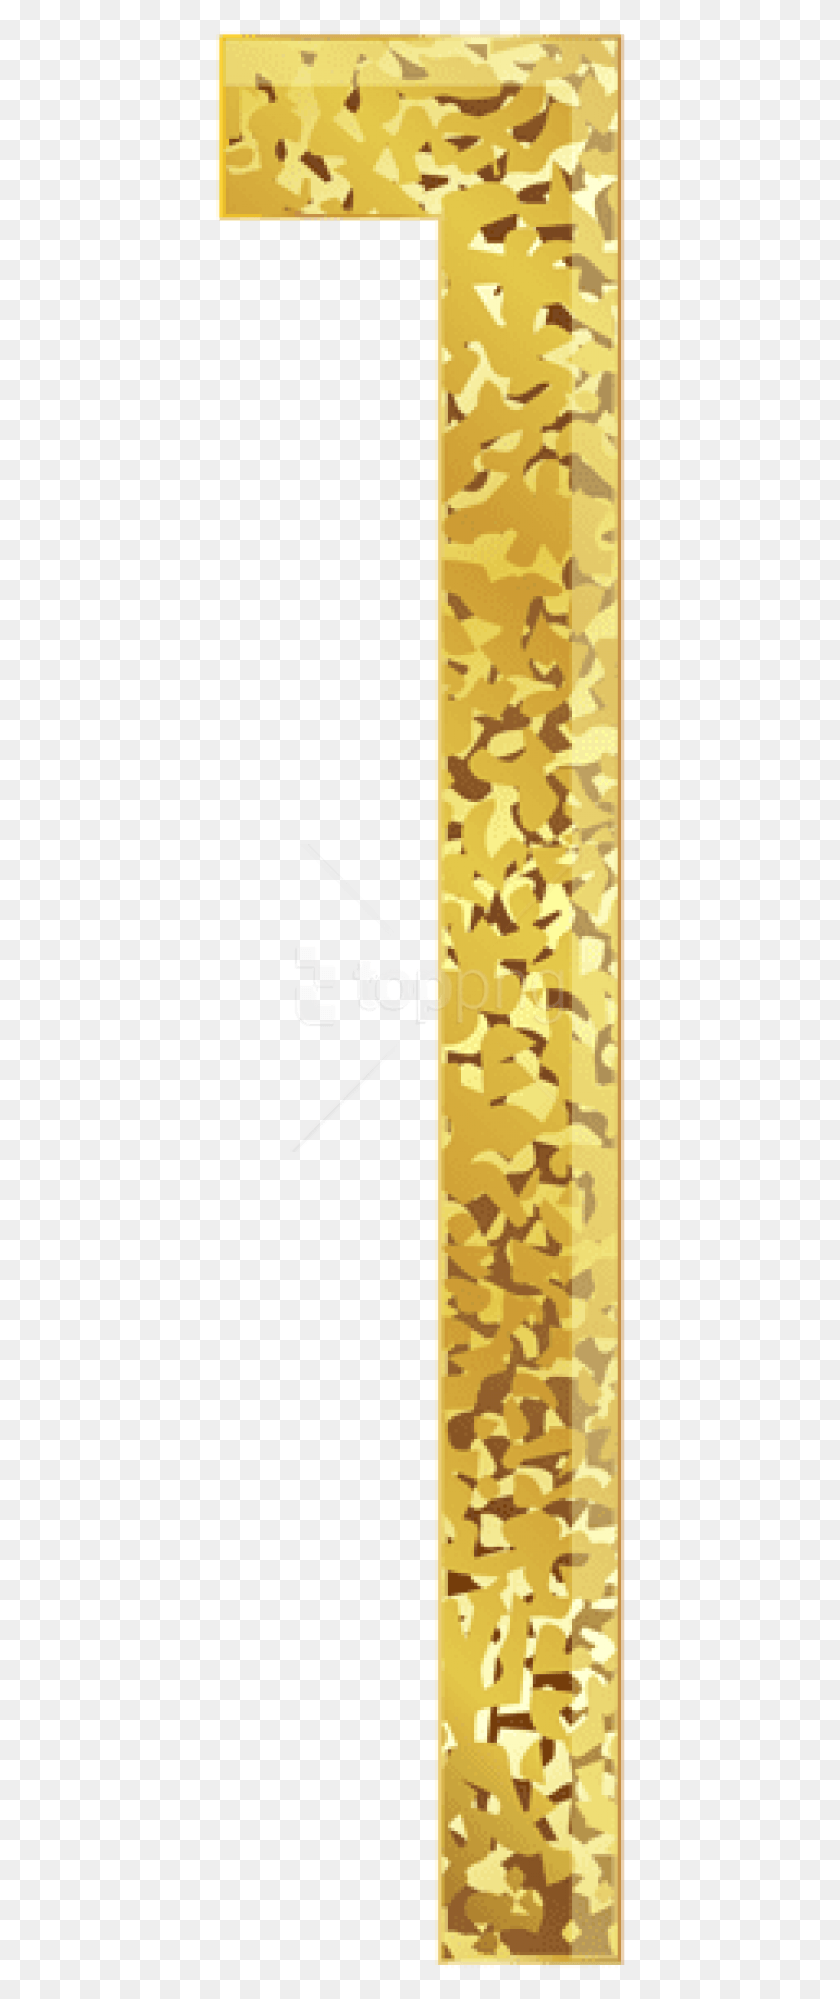 410x1939 Free One Gold Transparent Images Transparente Madera Contrachapada, Uniforme Militar, Militar, Camuflaje Hd Png Descargar